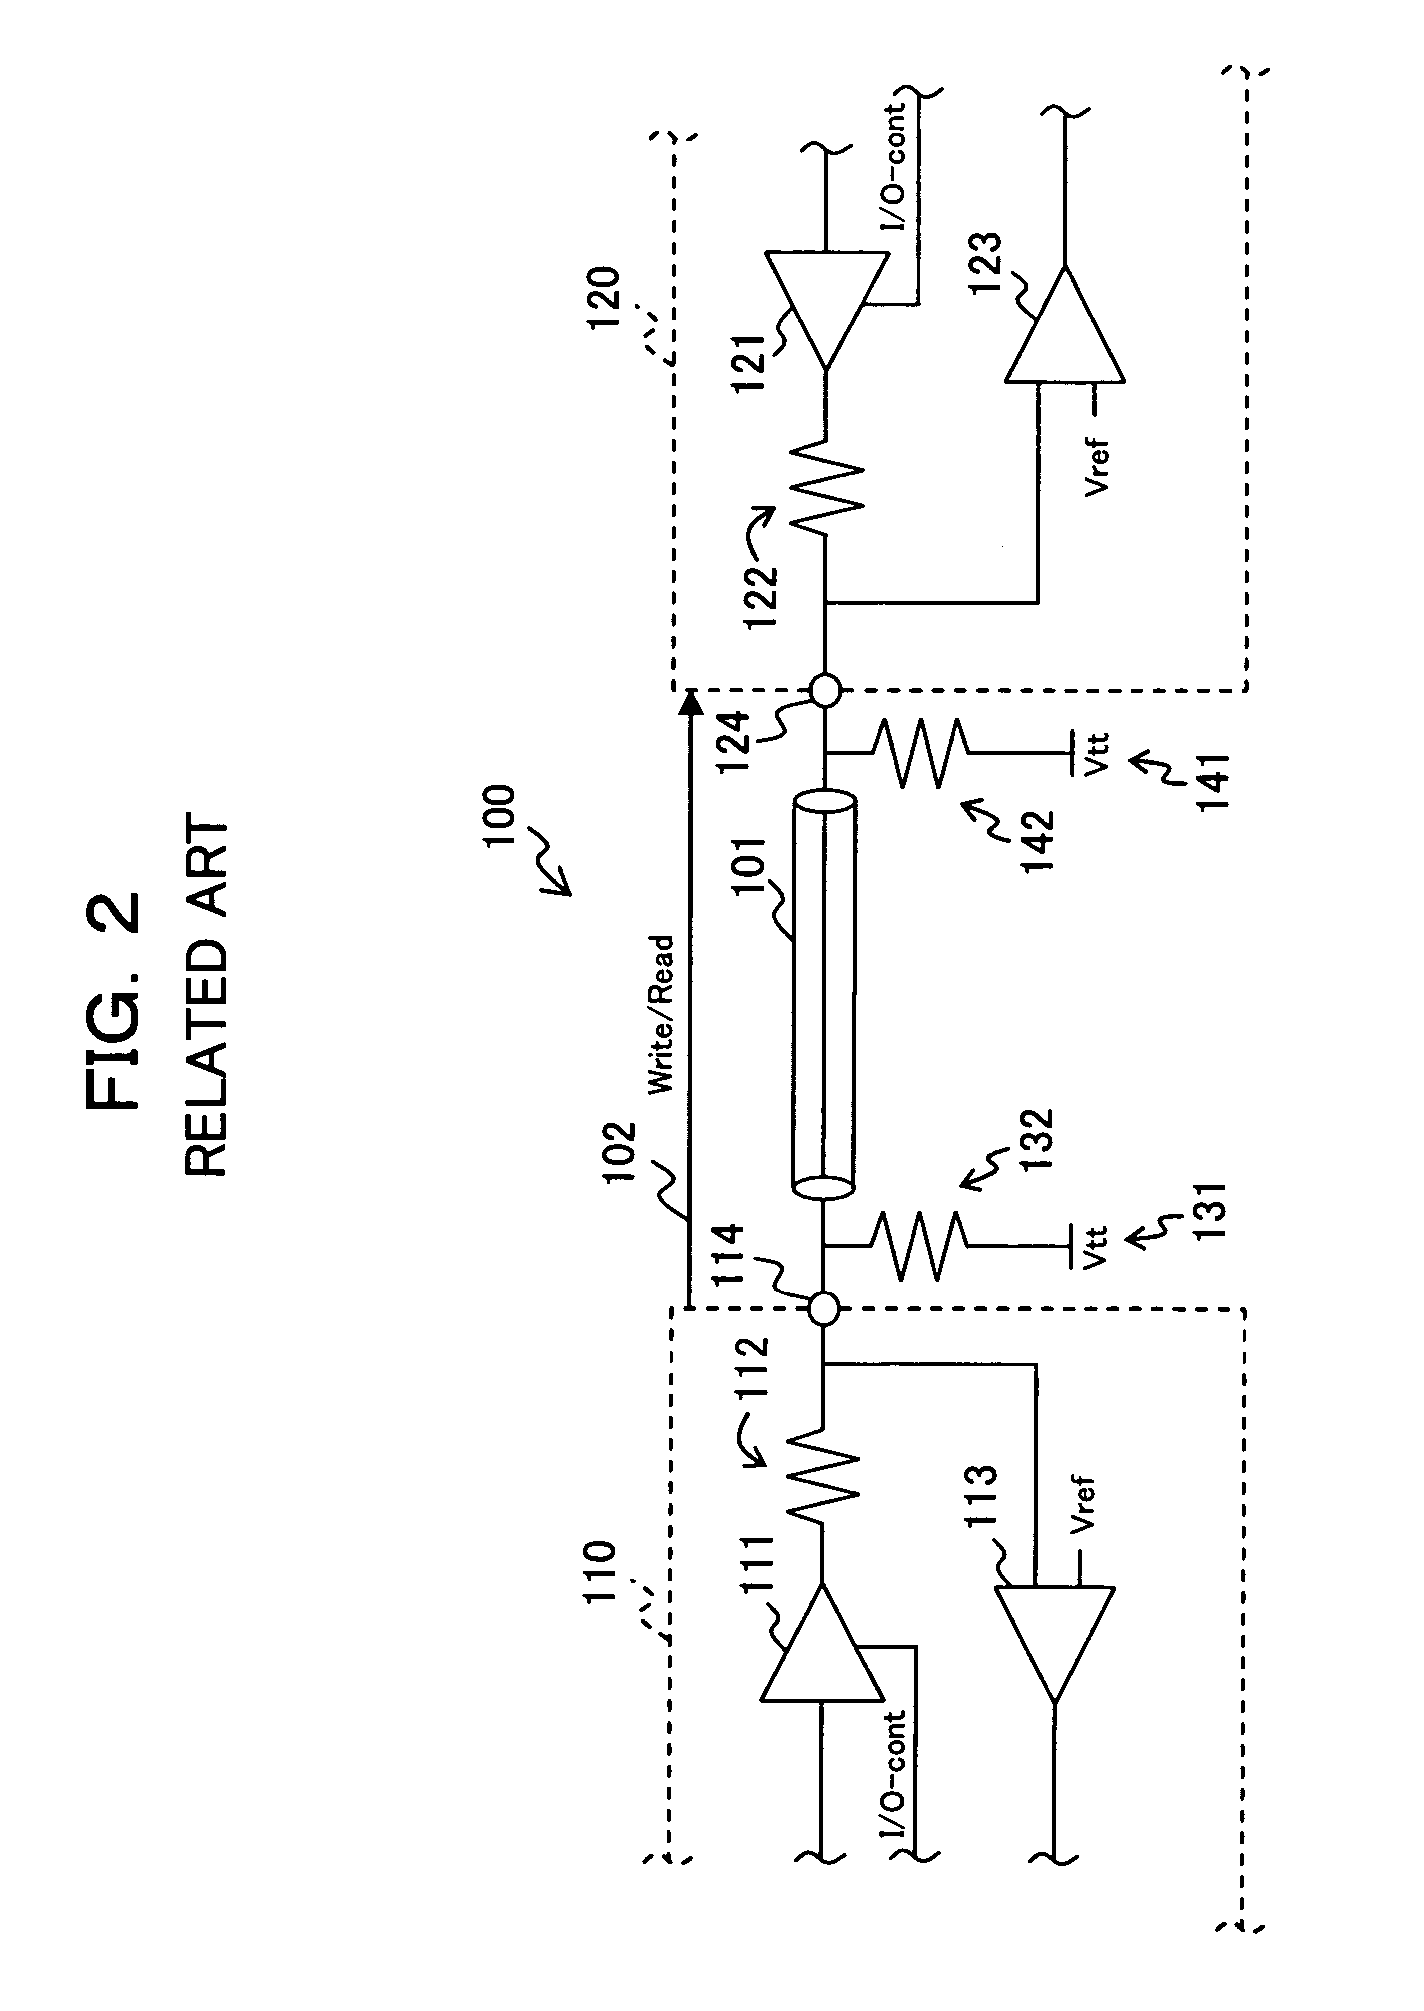 Bidirectional transmission circuit and sending/receiving element